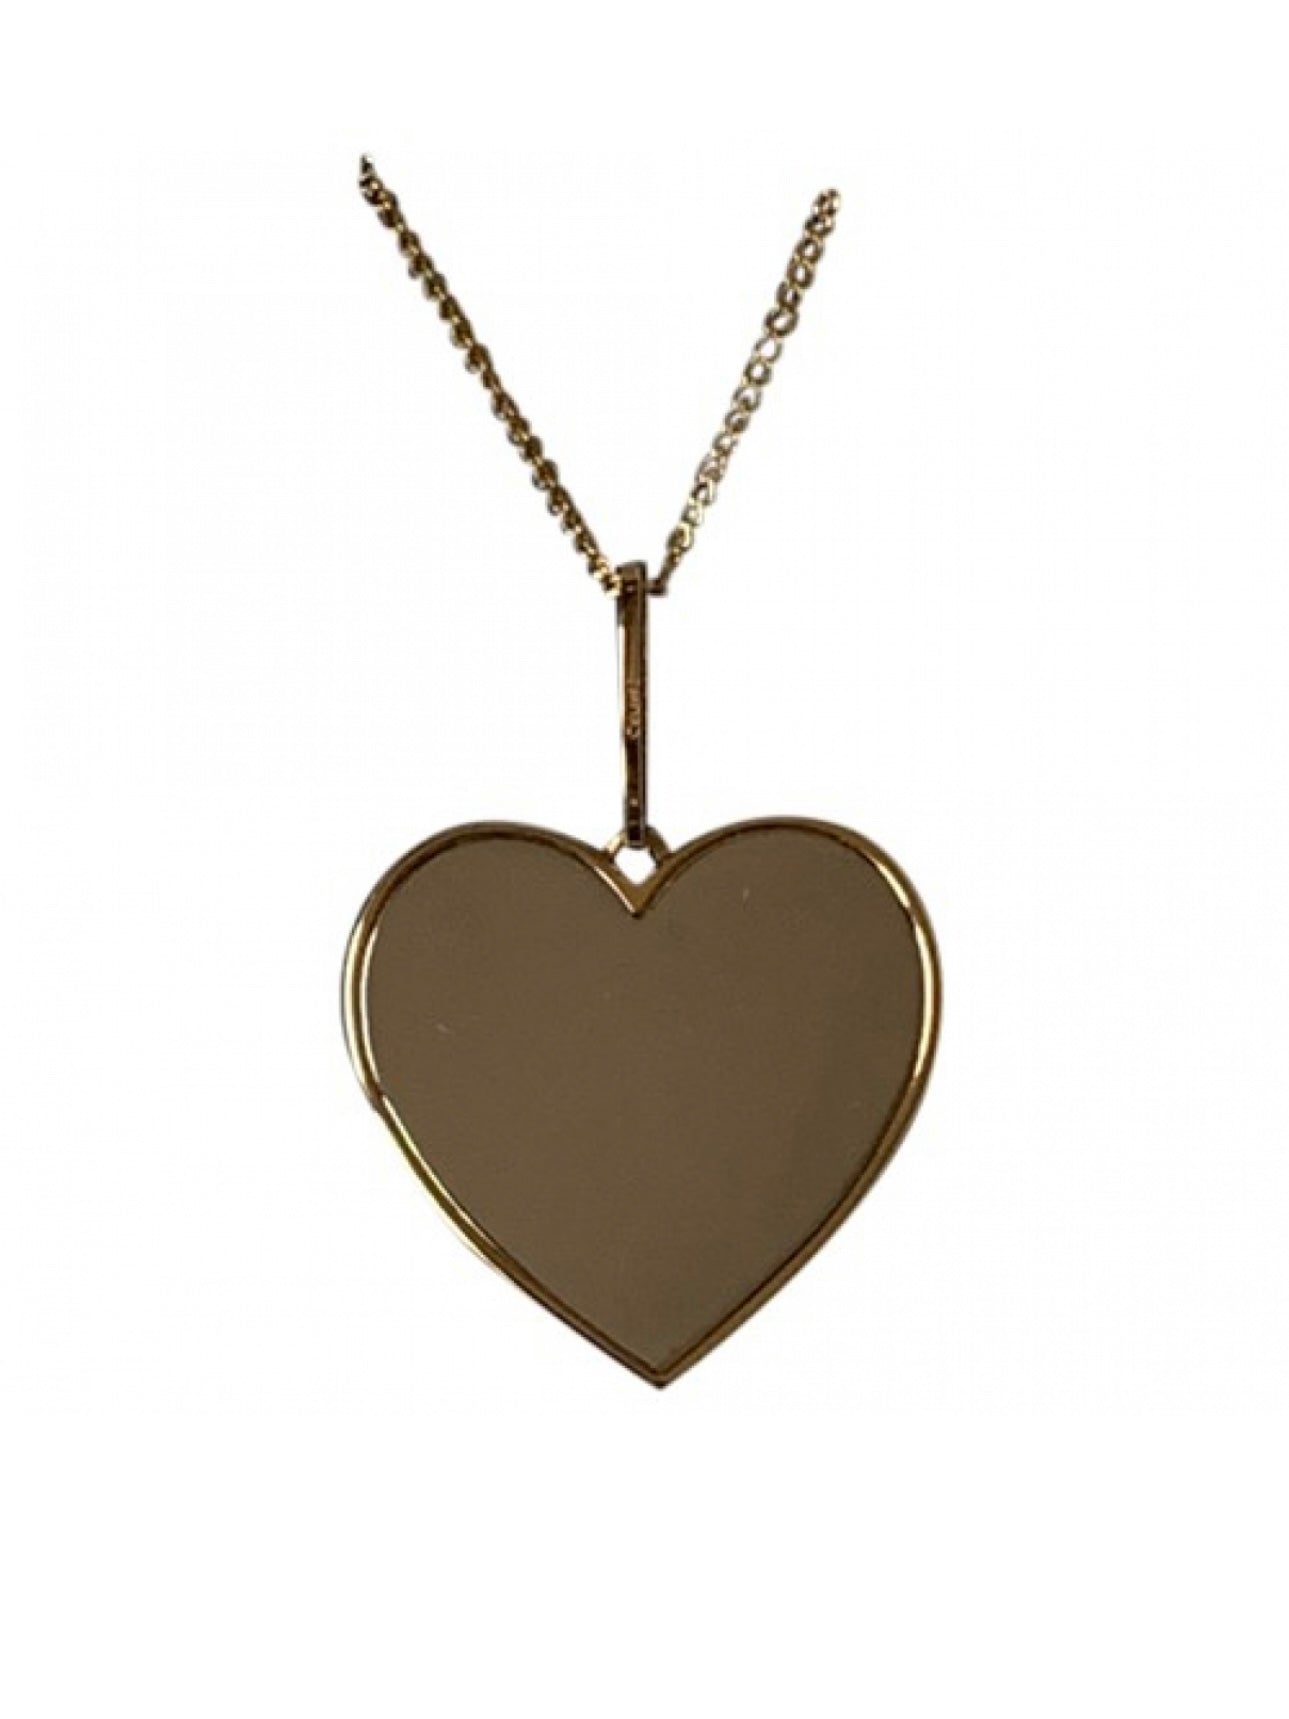 Celine heart shaped mirror necklace